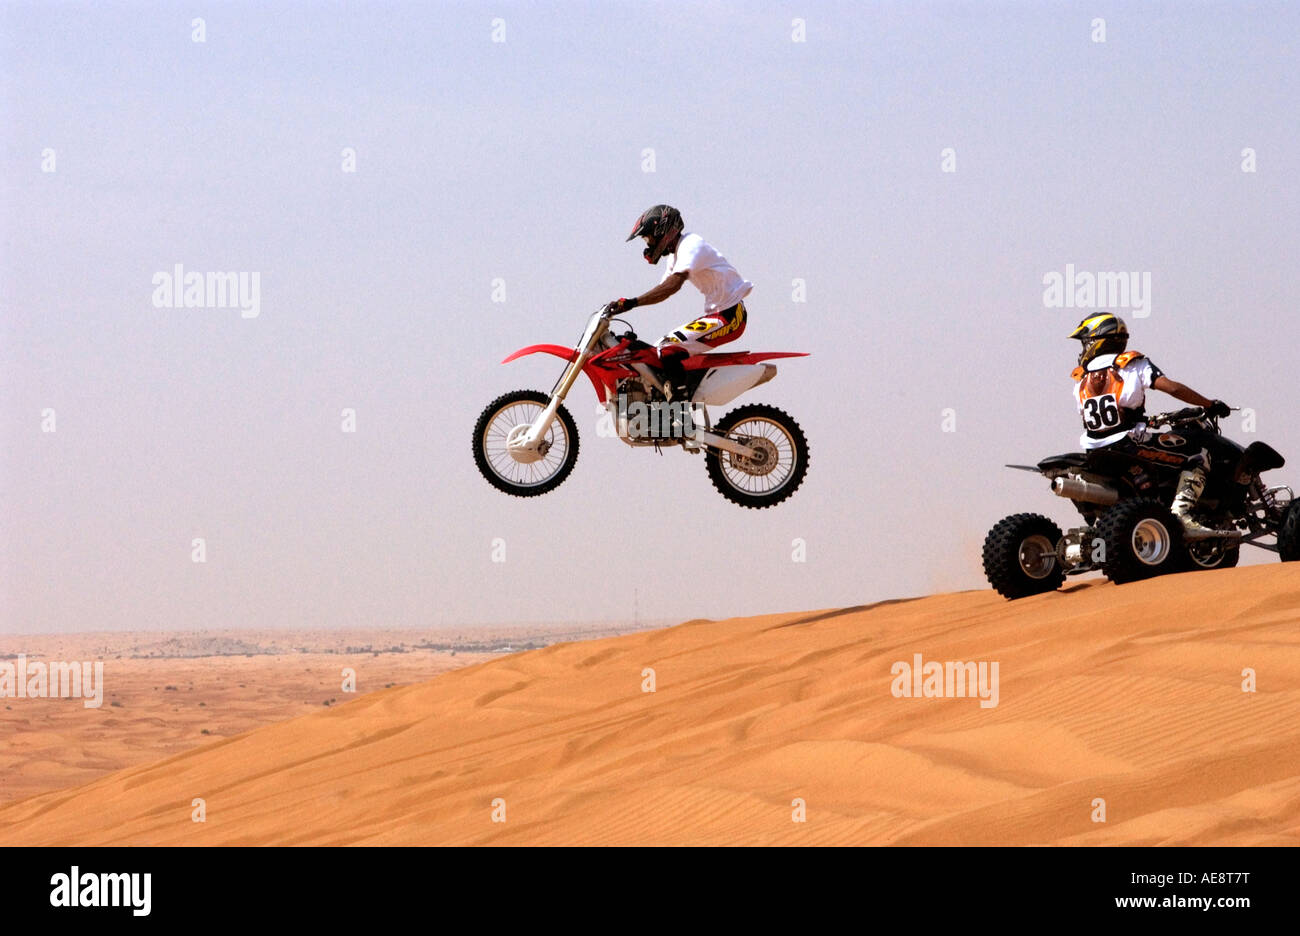 Quadbike speeding off the edge of a Dubai desert dune Stock Photo